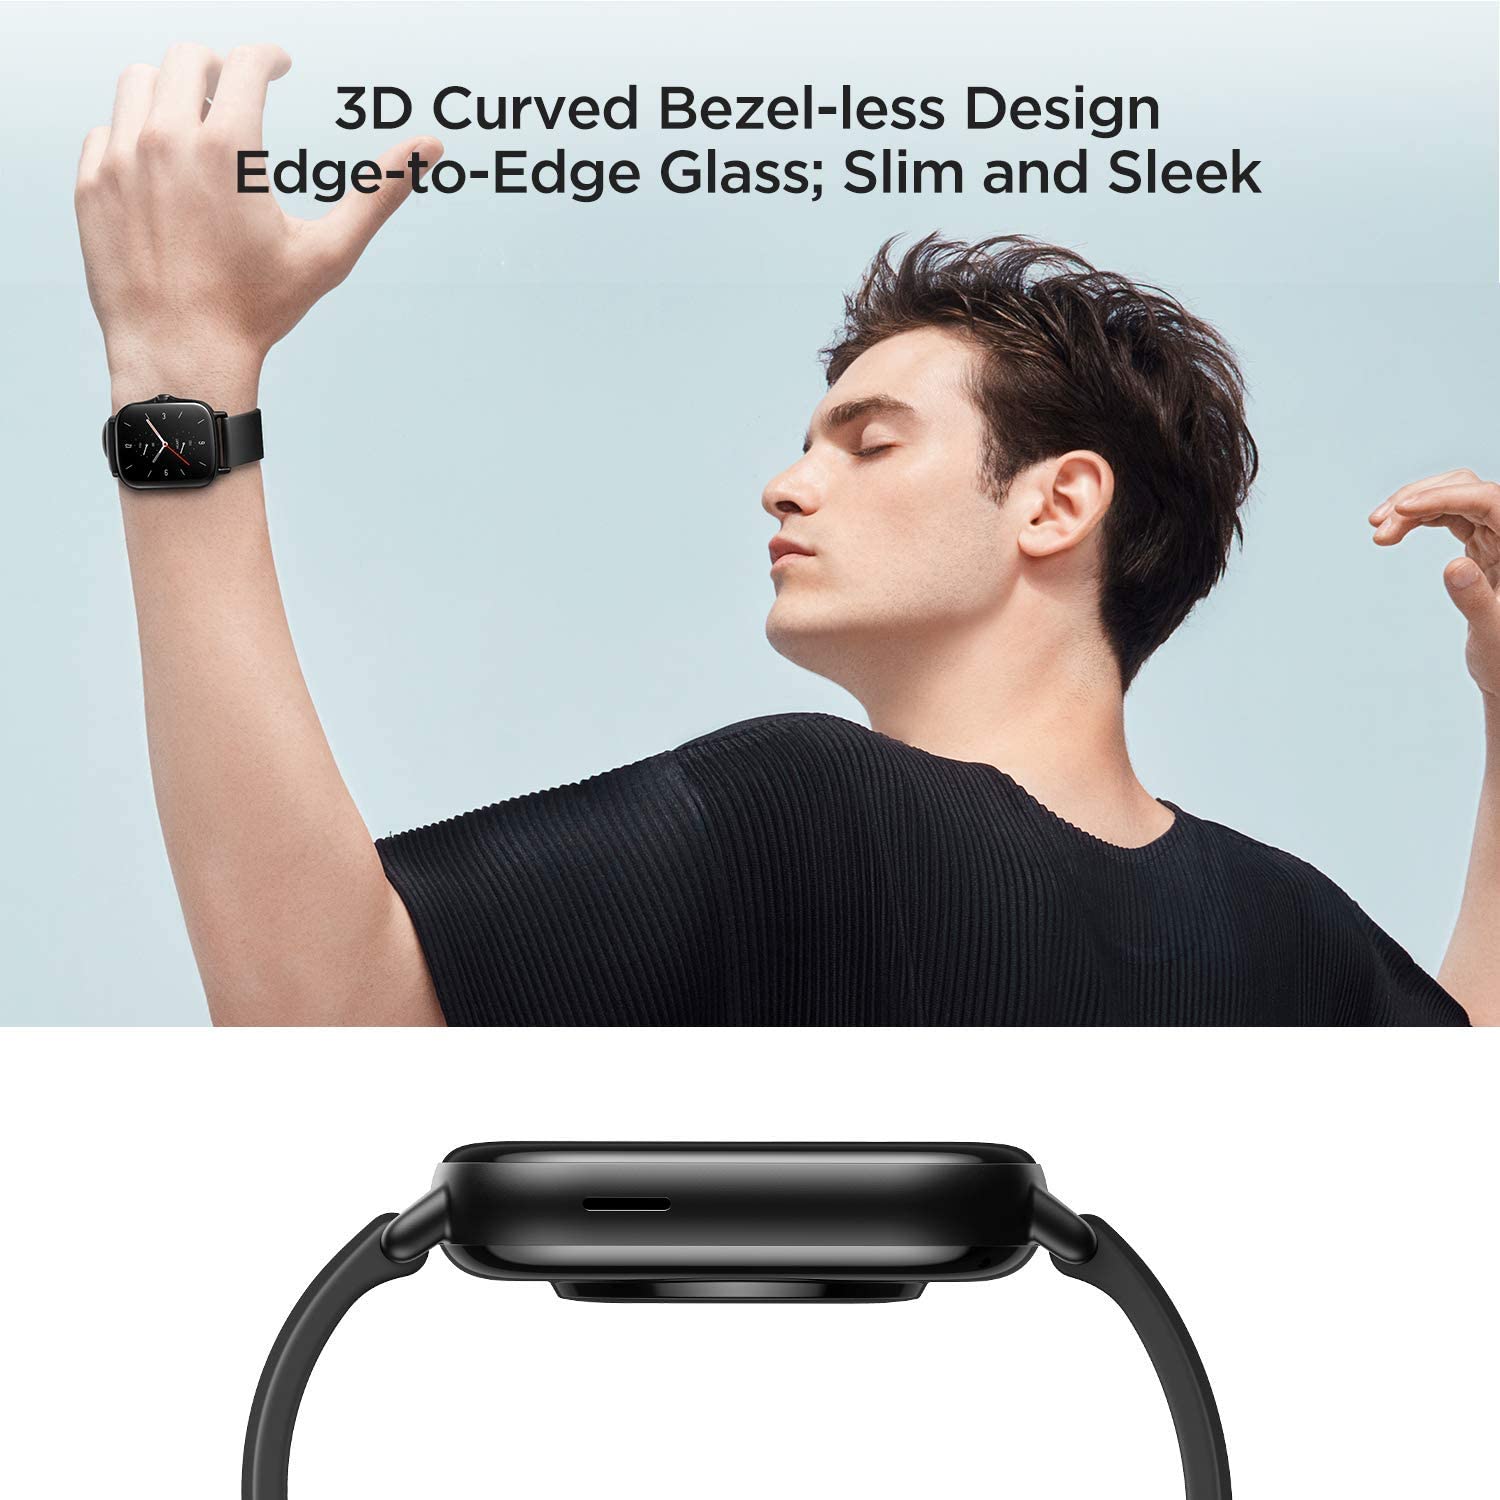 Smartwatch Xiaomi Amazfit GTS 2 A1969 Bluetooth/GPS - Black